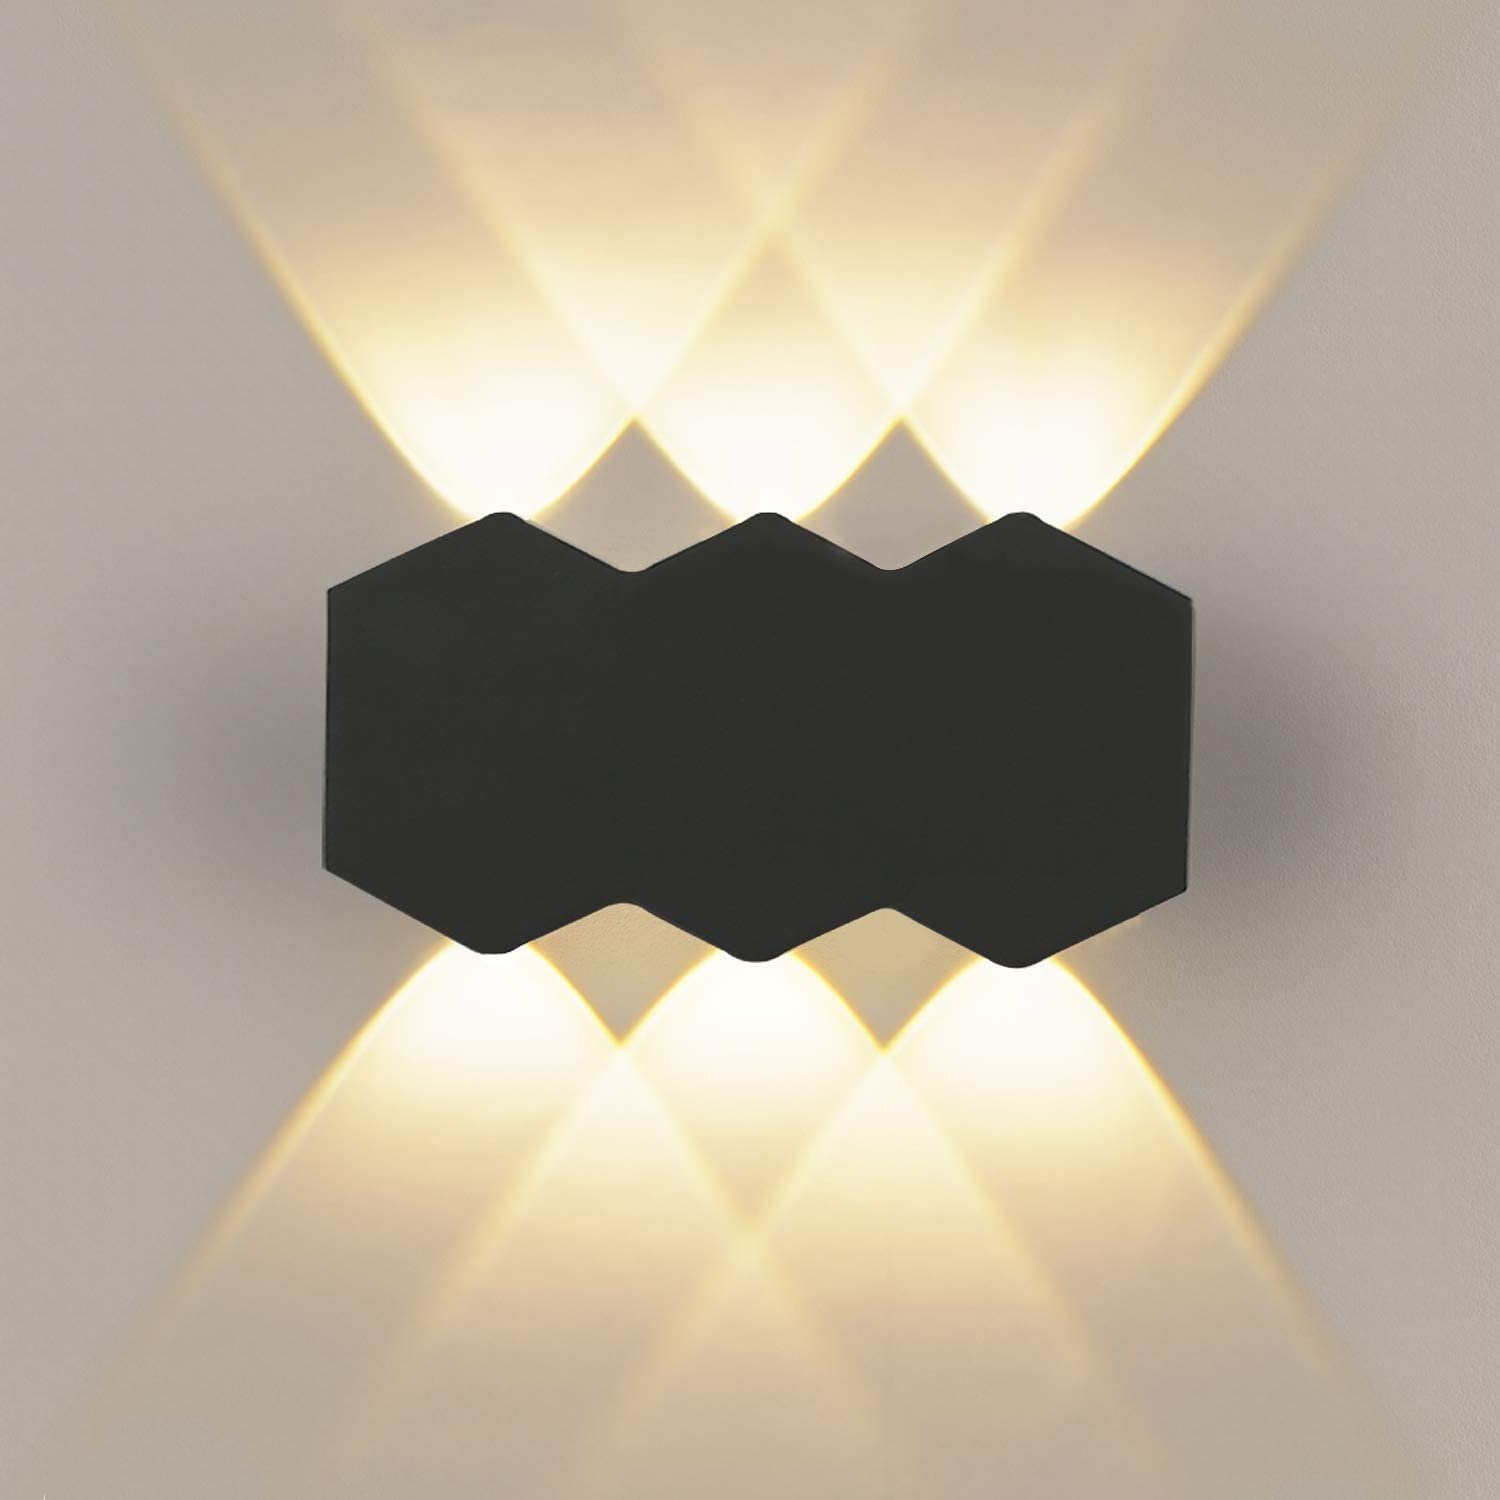 2 bis 5x LED Wandleuchte Innen Wandlampe Flur Strahler Licht Up Down Modern 